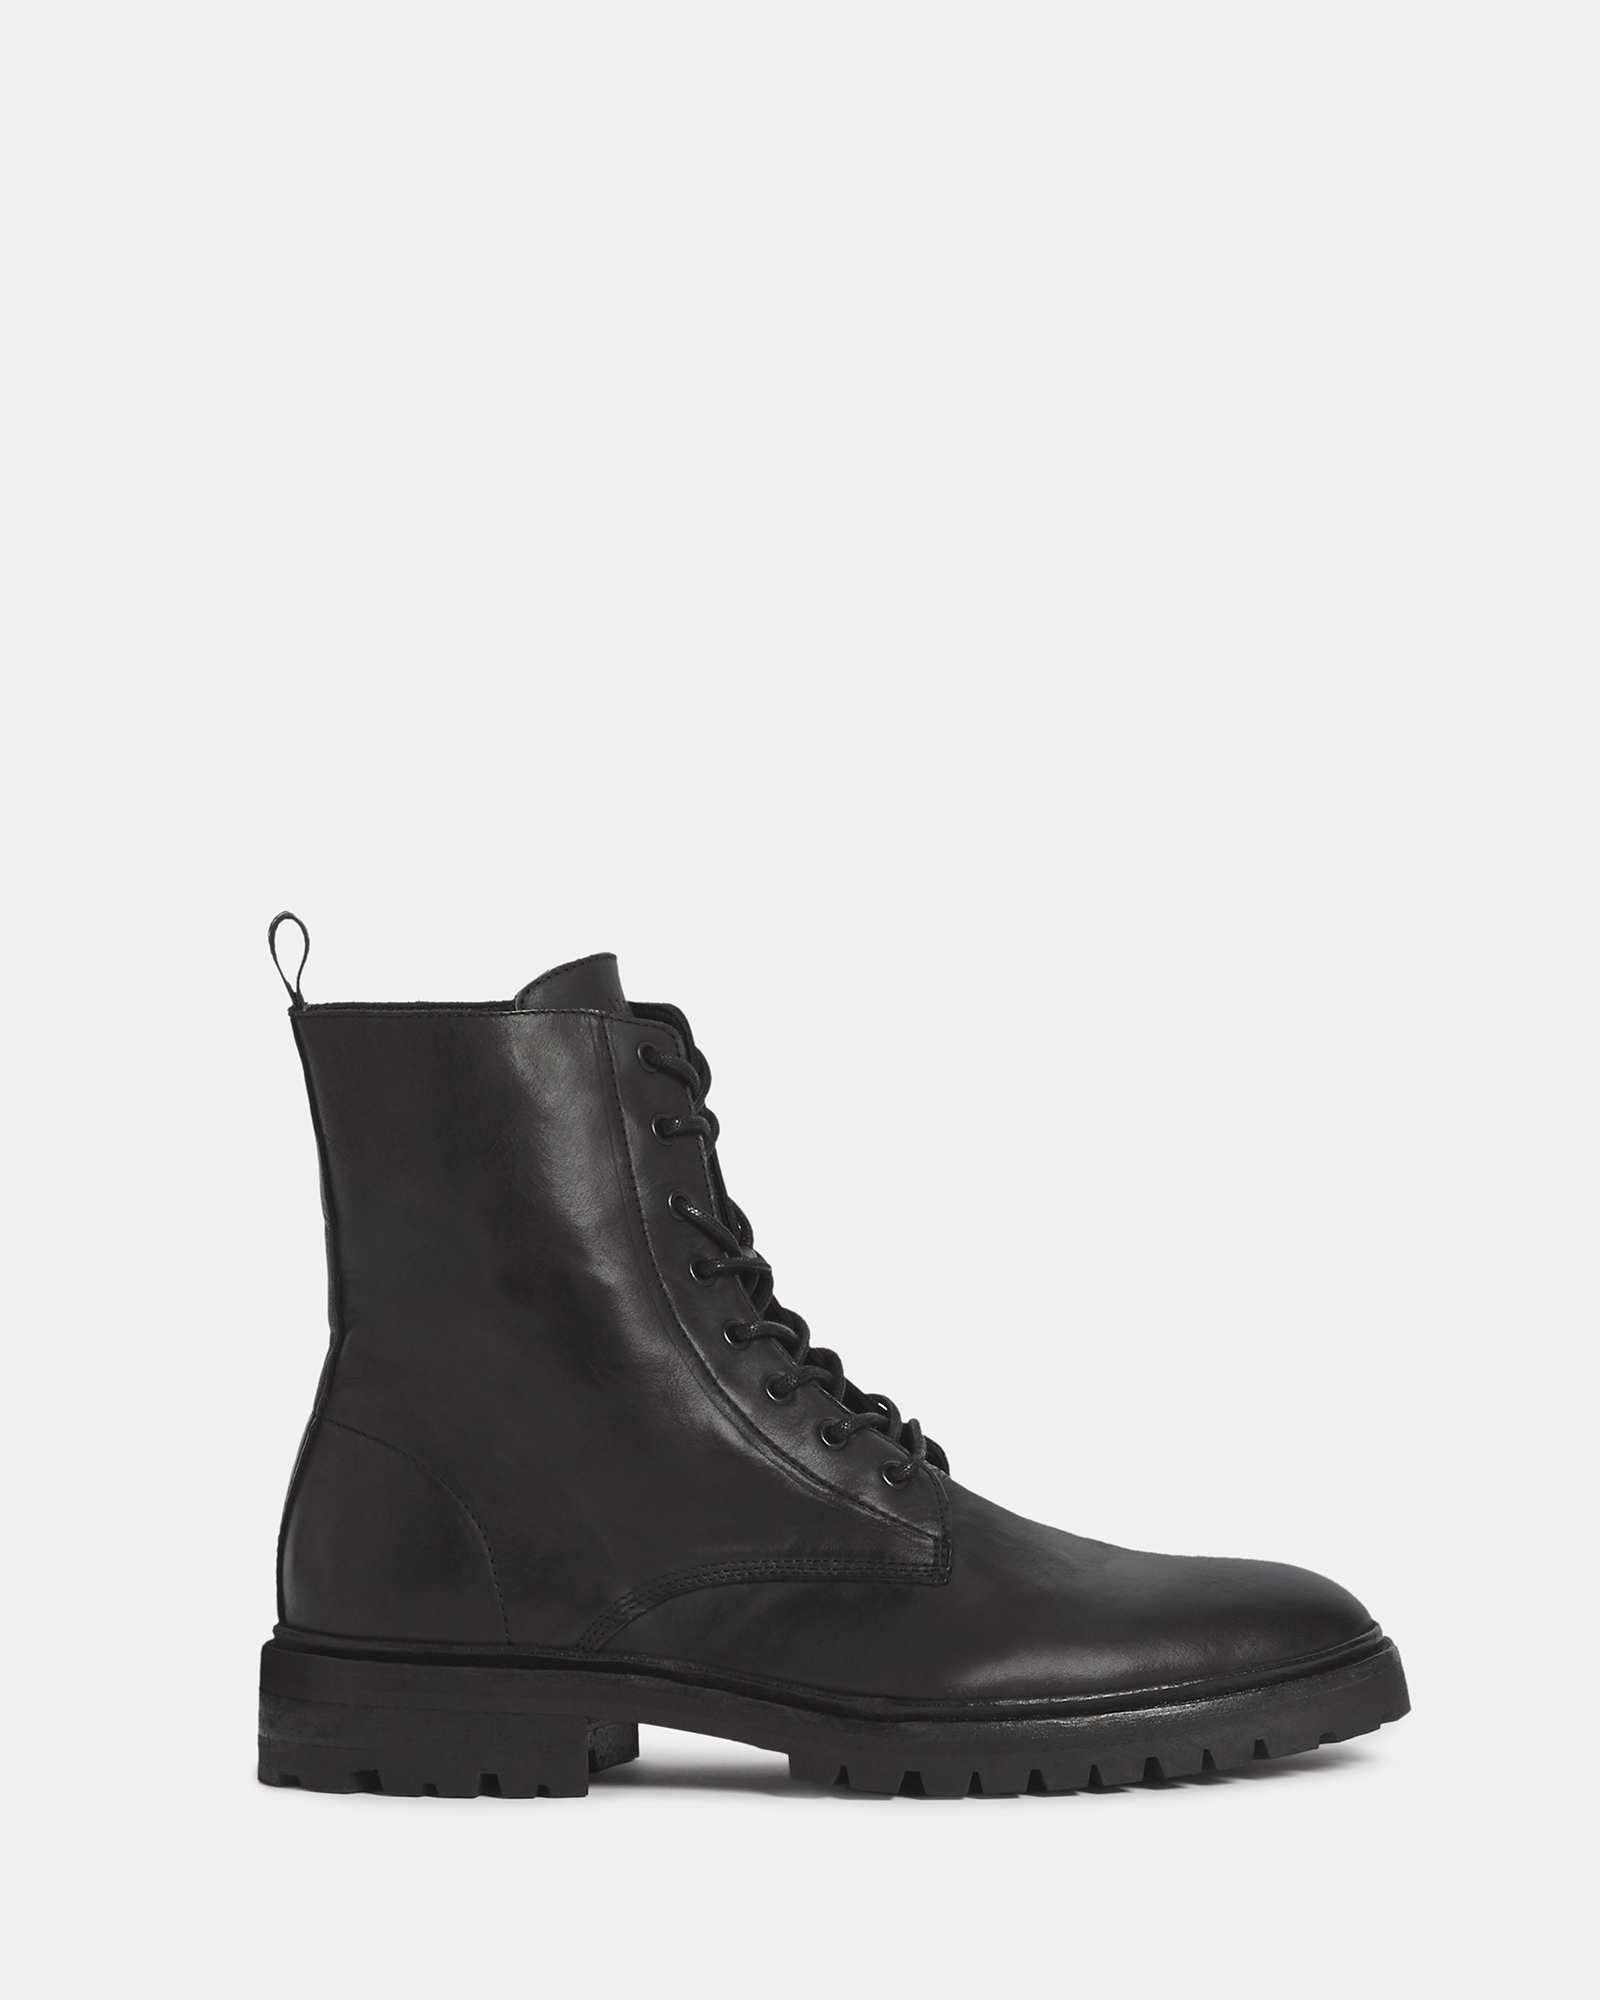 AllSaints Men's Leather Classic Smooth Tobias Boots, Black, Size: UK 10